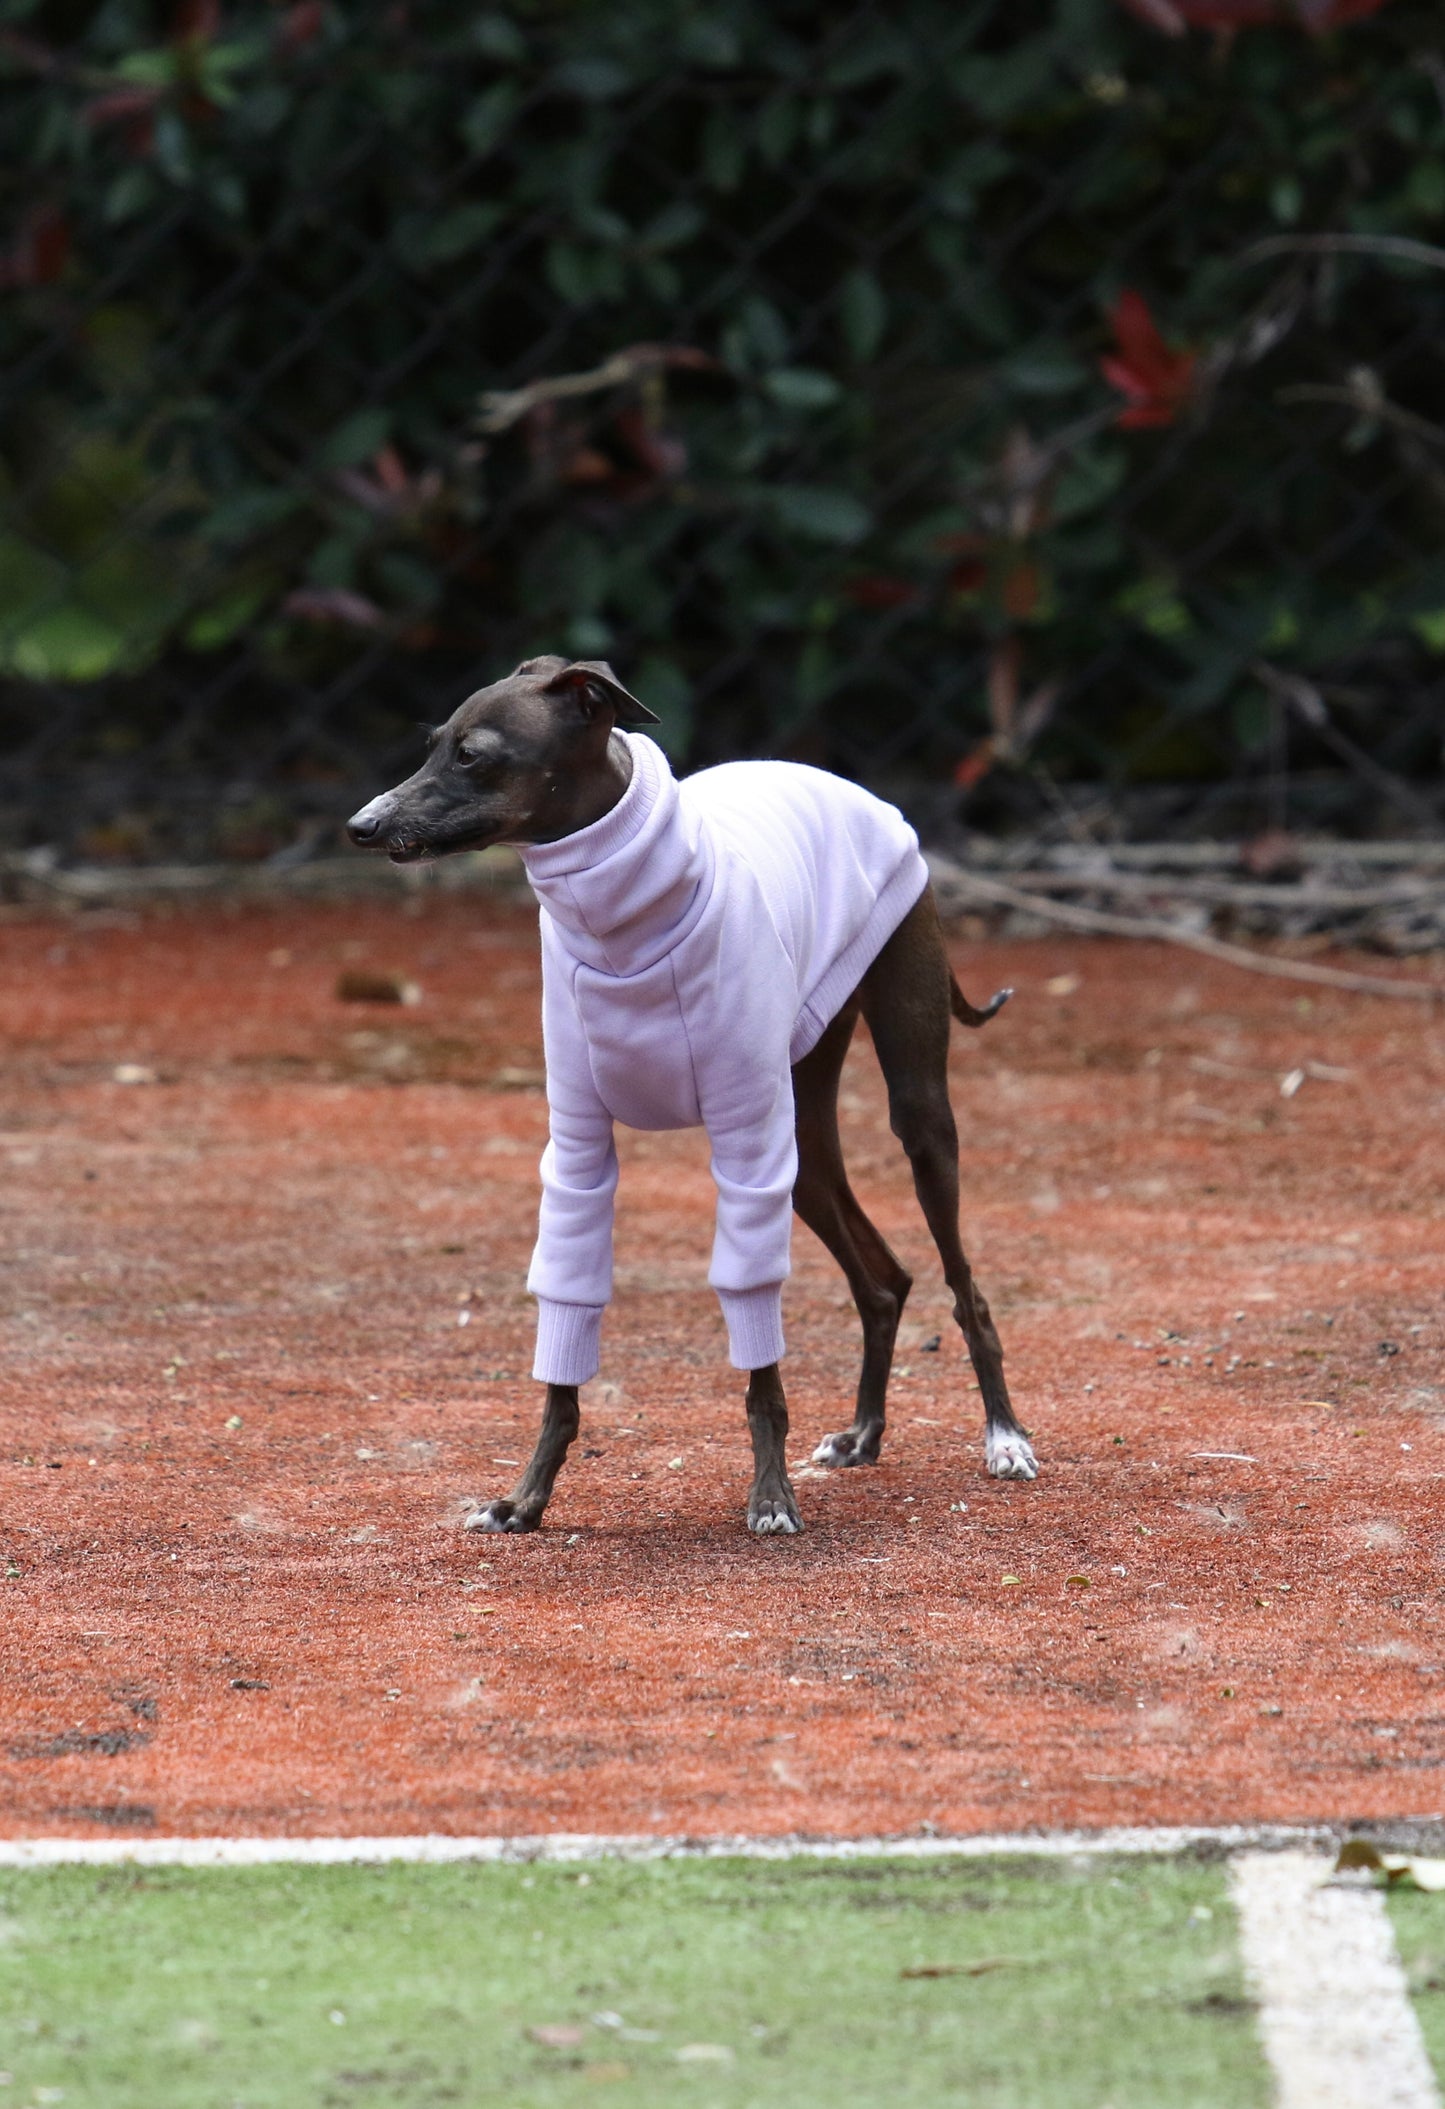 Italian Greyhound Thick Cotton Jumper | Lilac